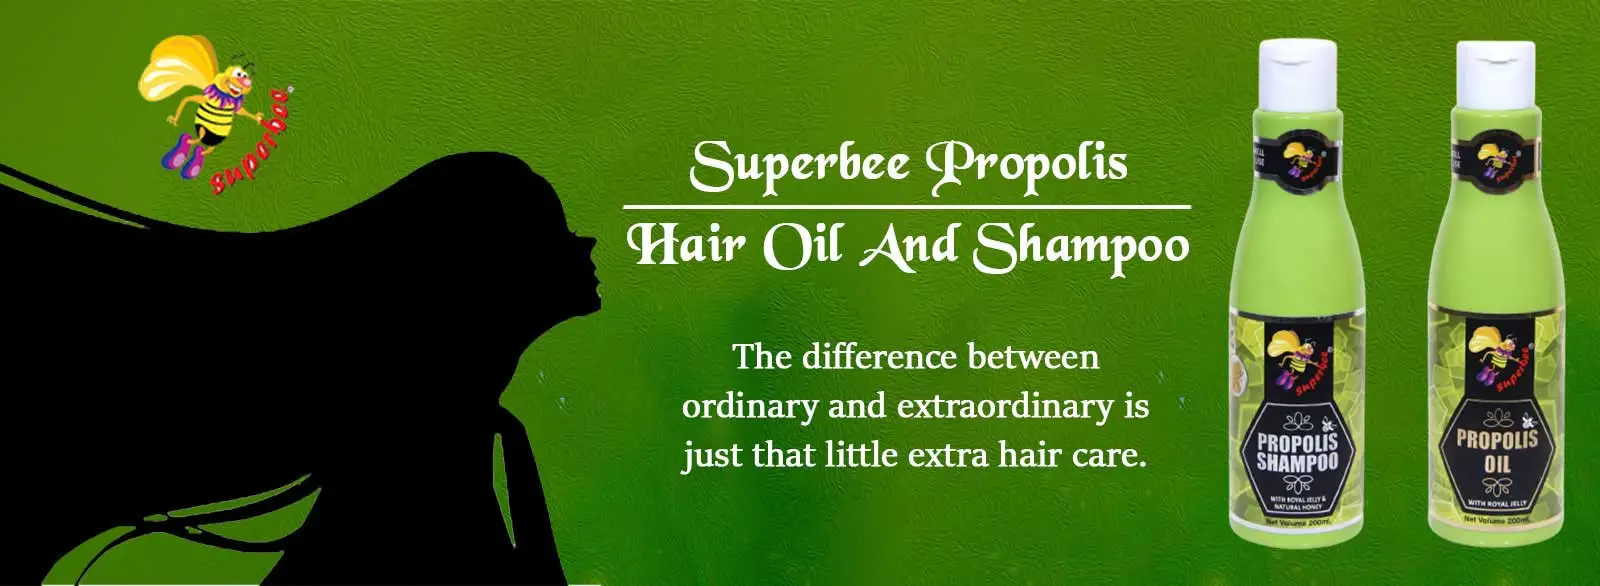 Superbee Propolis Hair Oil And Shampoo Suppliers in Delhi